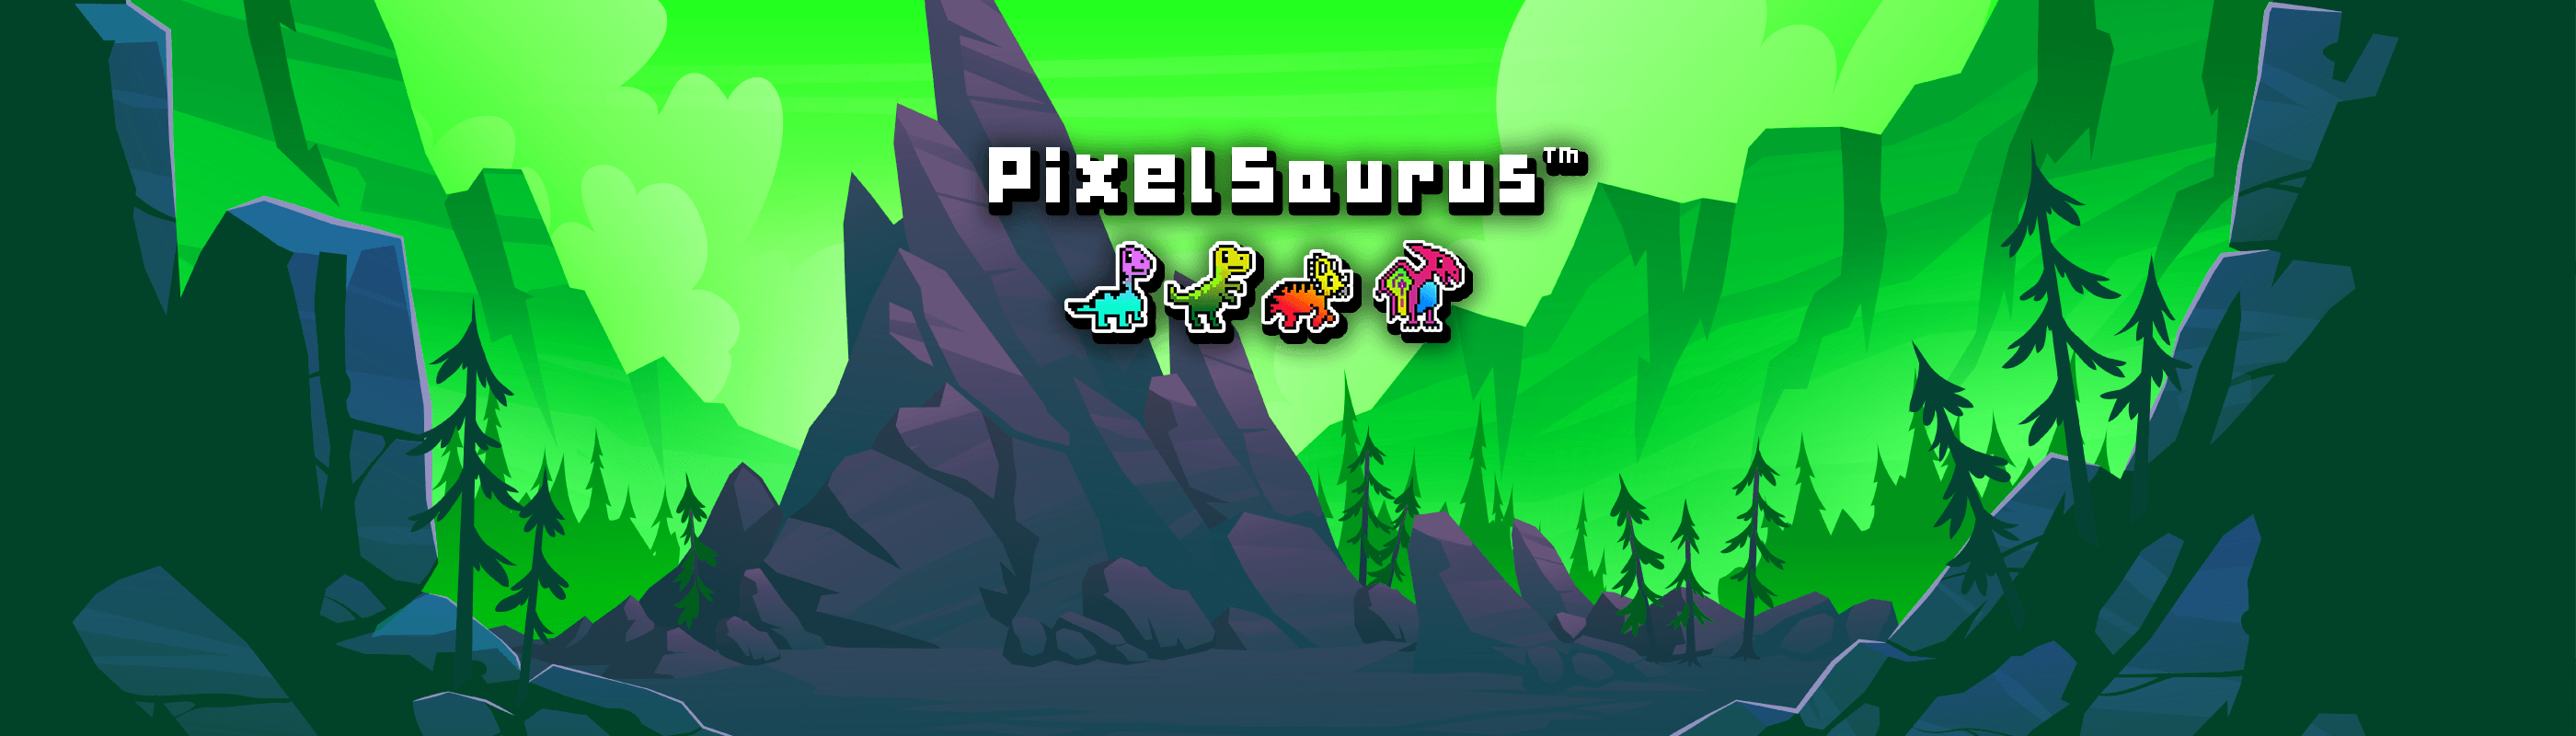 PixelSaurus banner